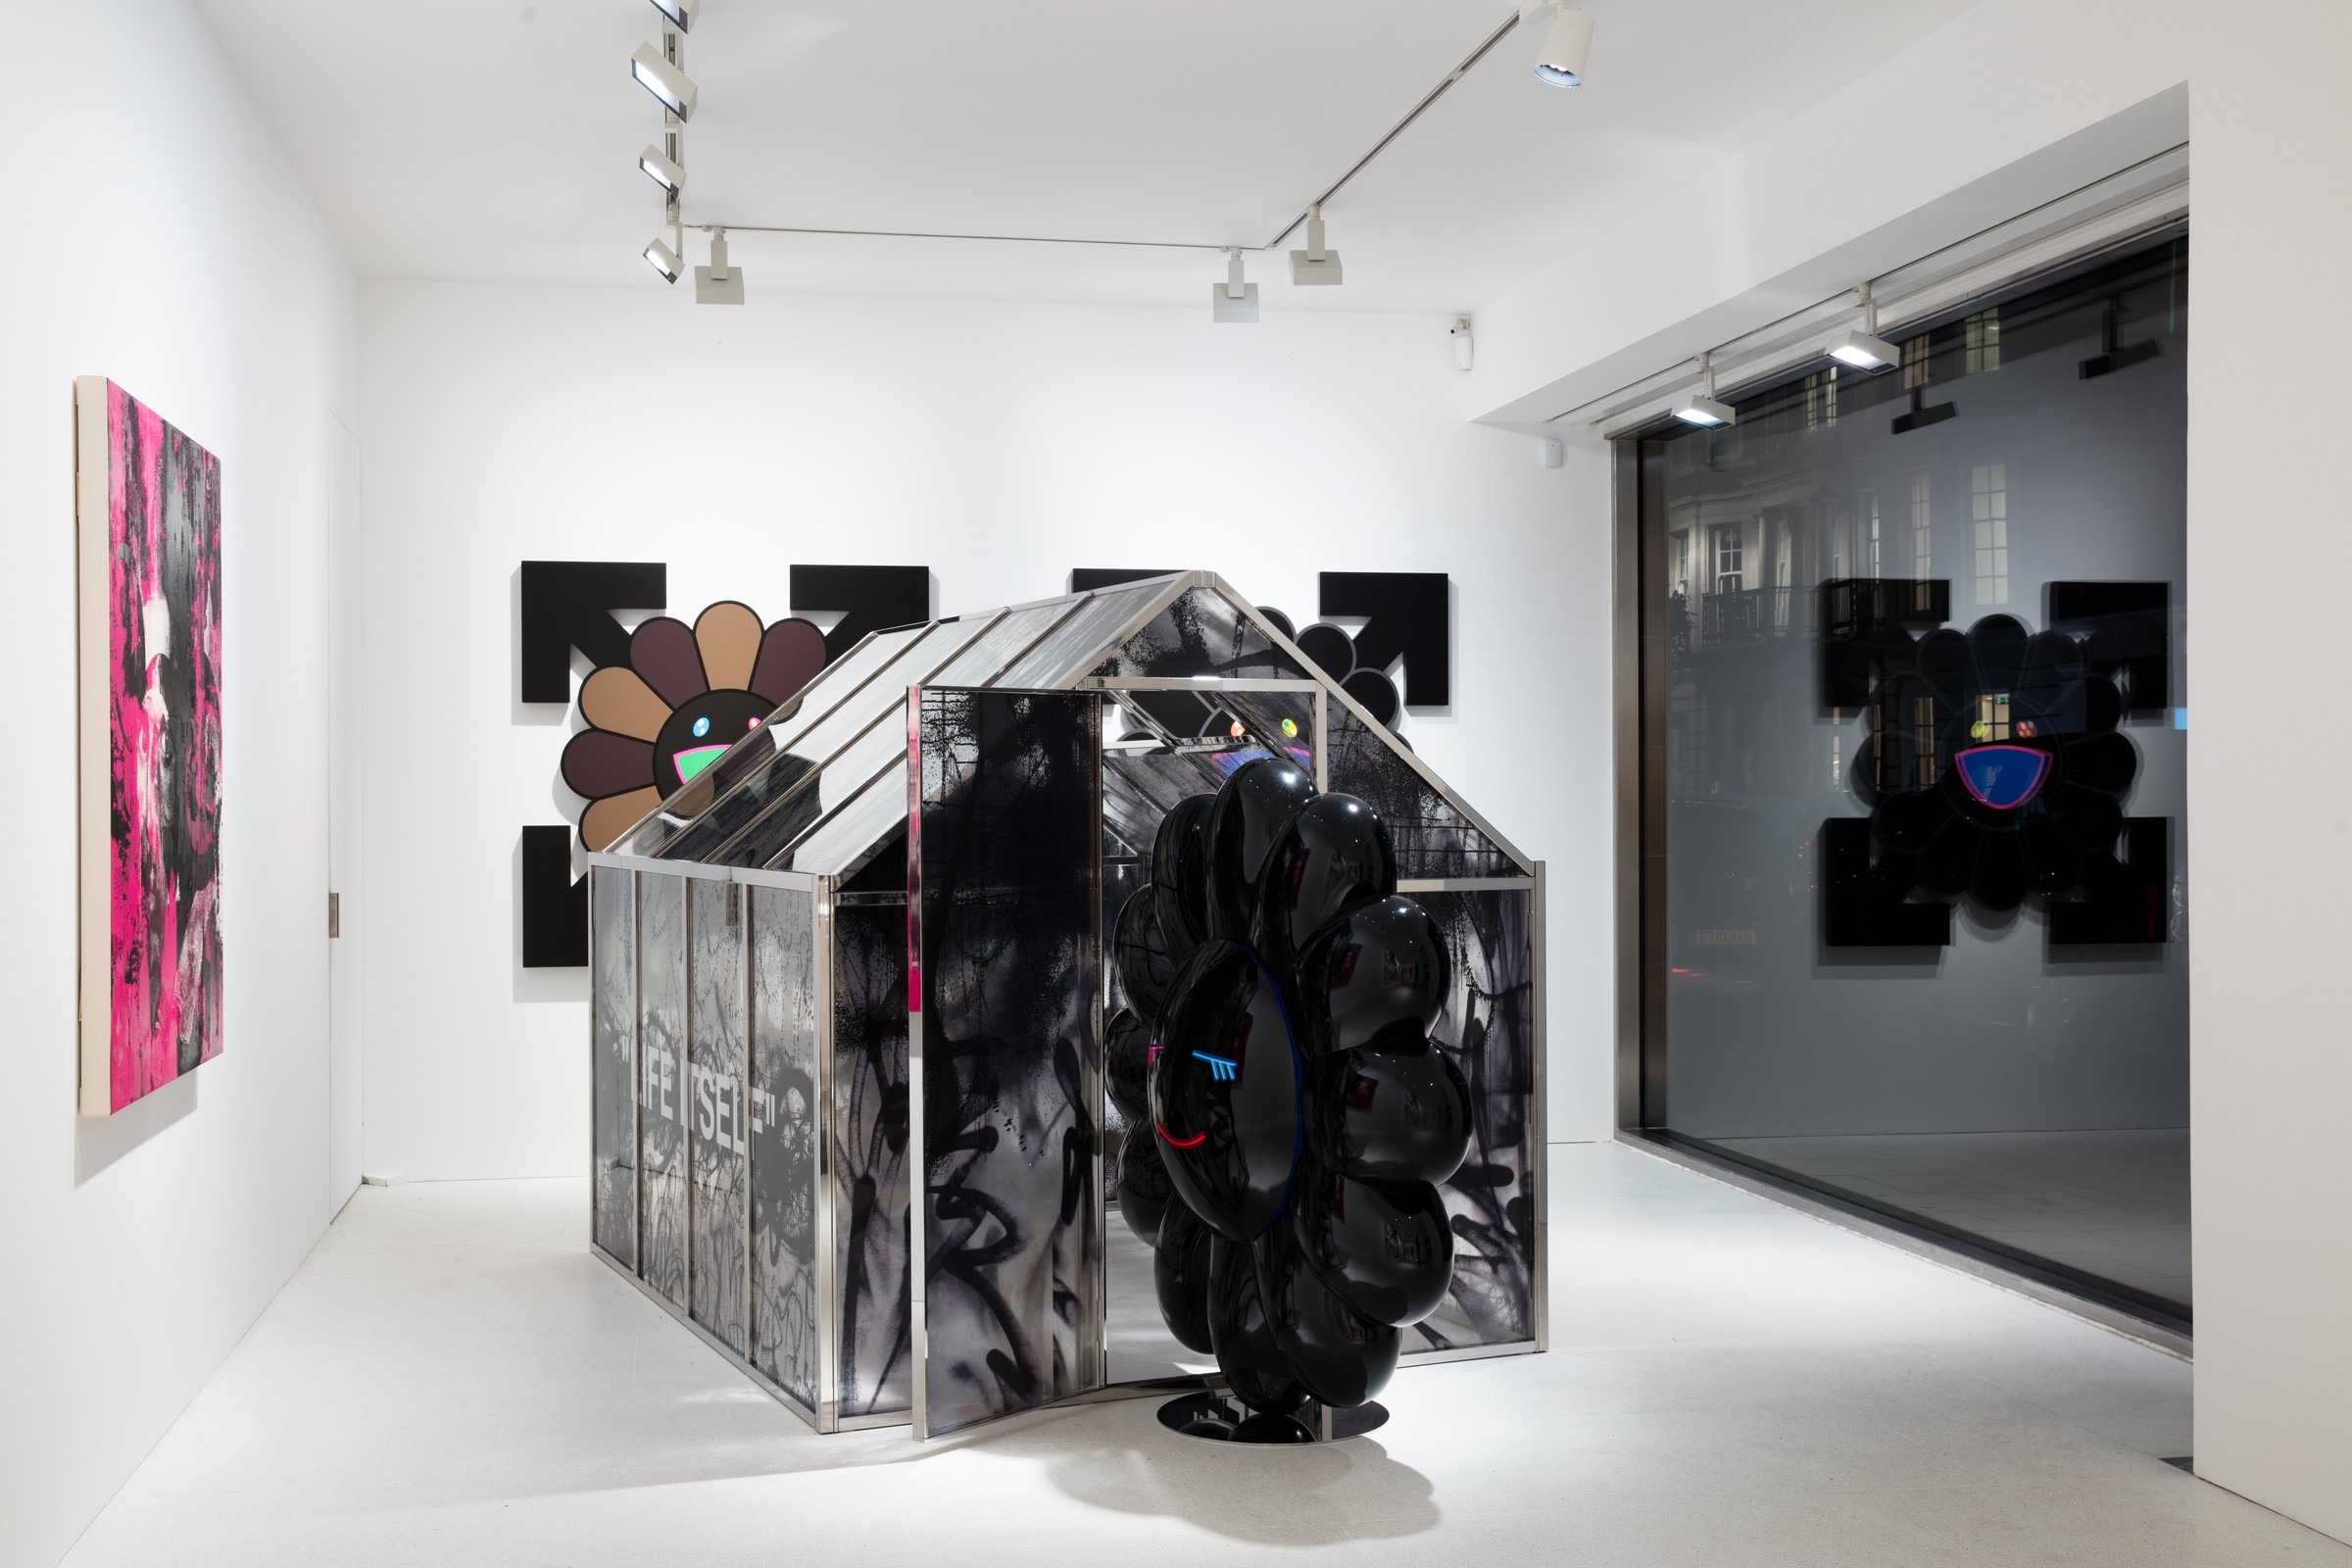 Installation view of Future History, Takashi Murakami and Virgil Abloh's exhibition at Gagosian